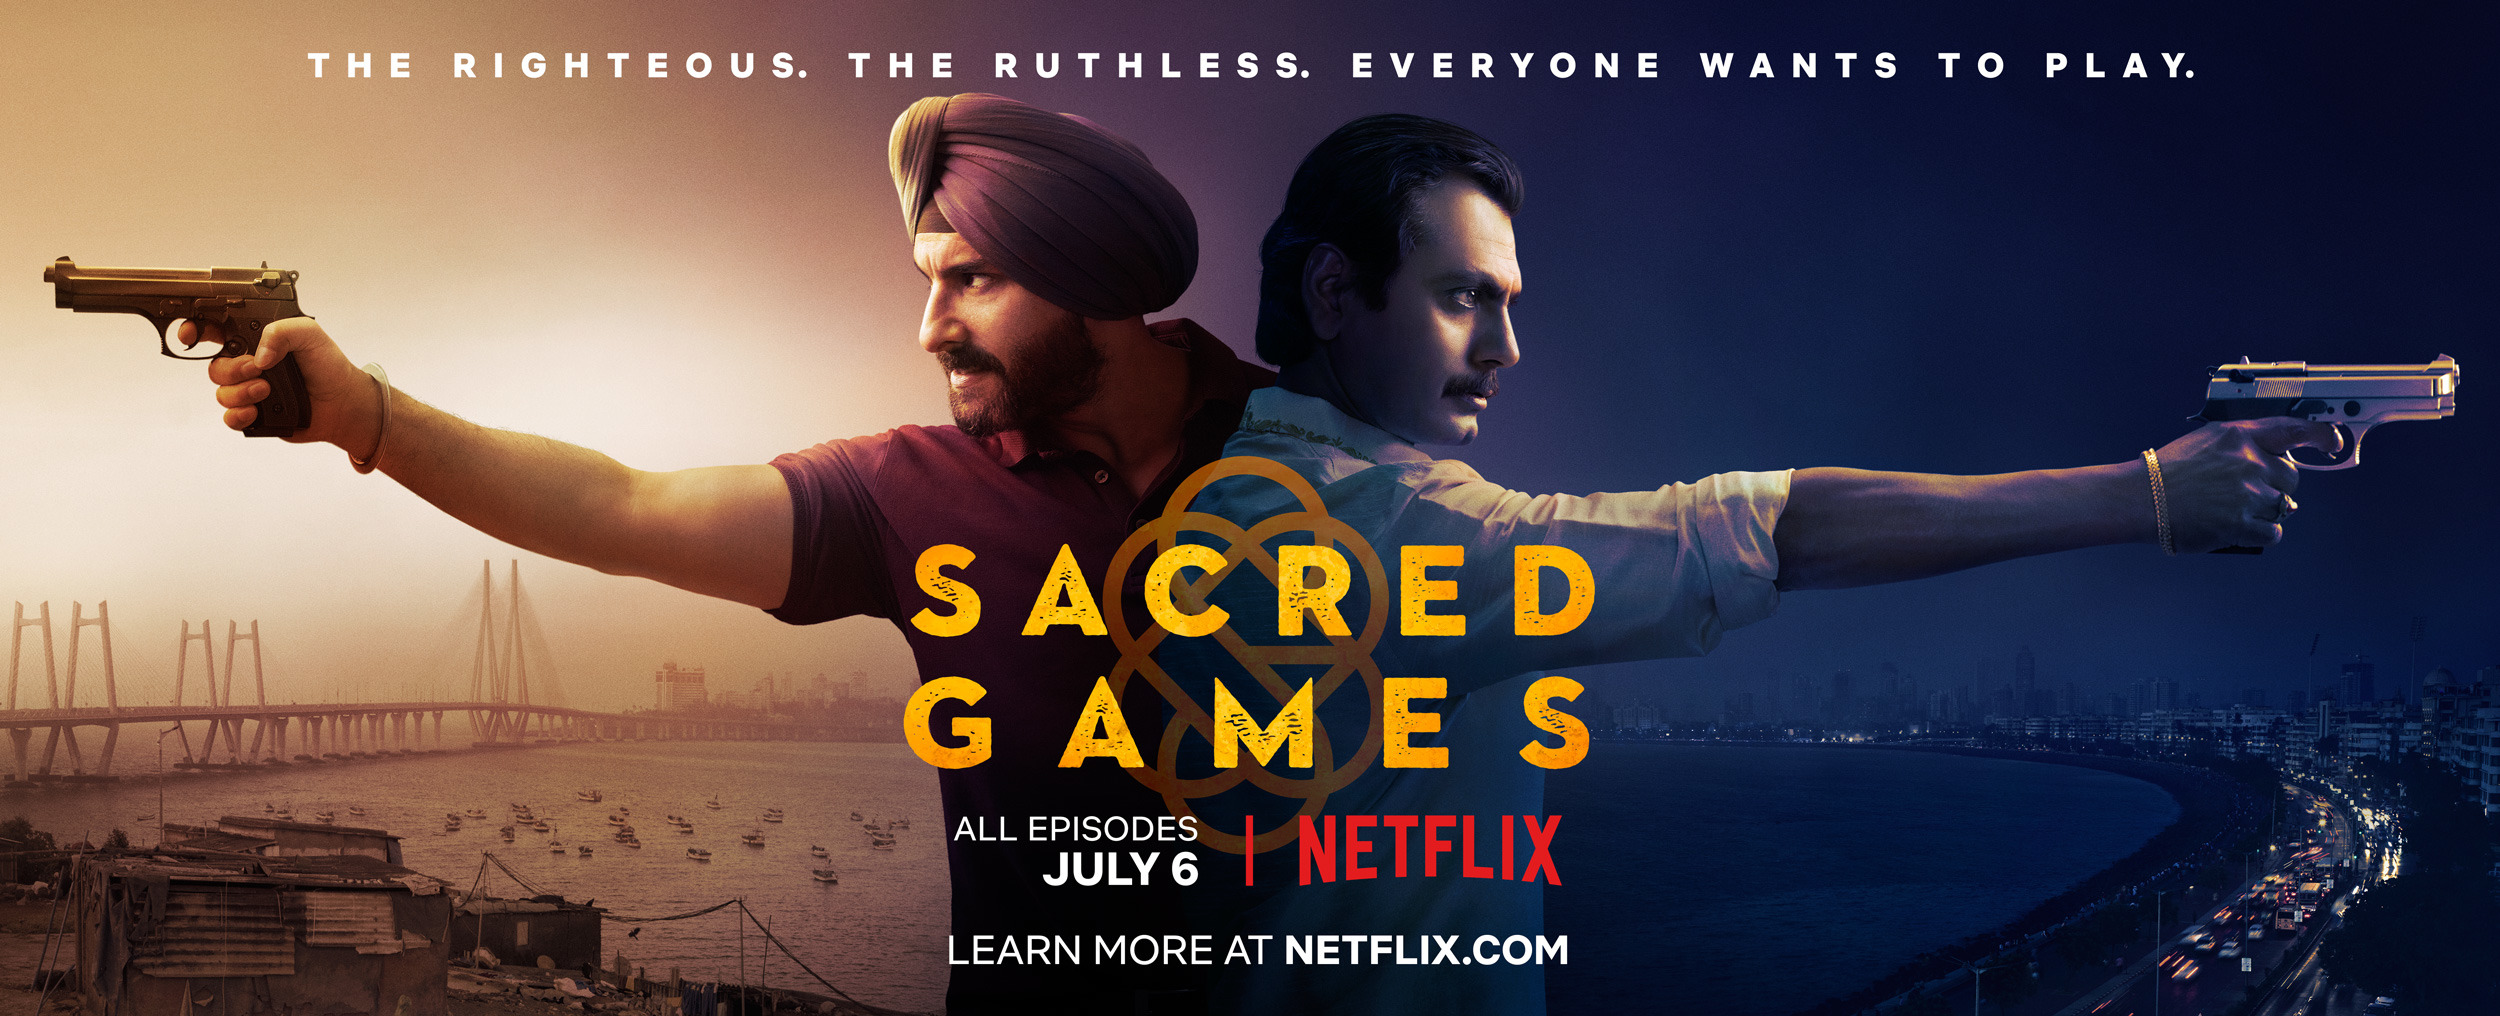 Mega Sized TV Poster Image for Sacred Games (#13 of 20)